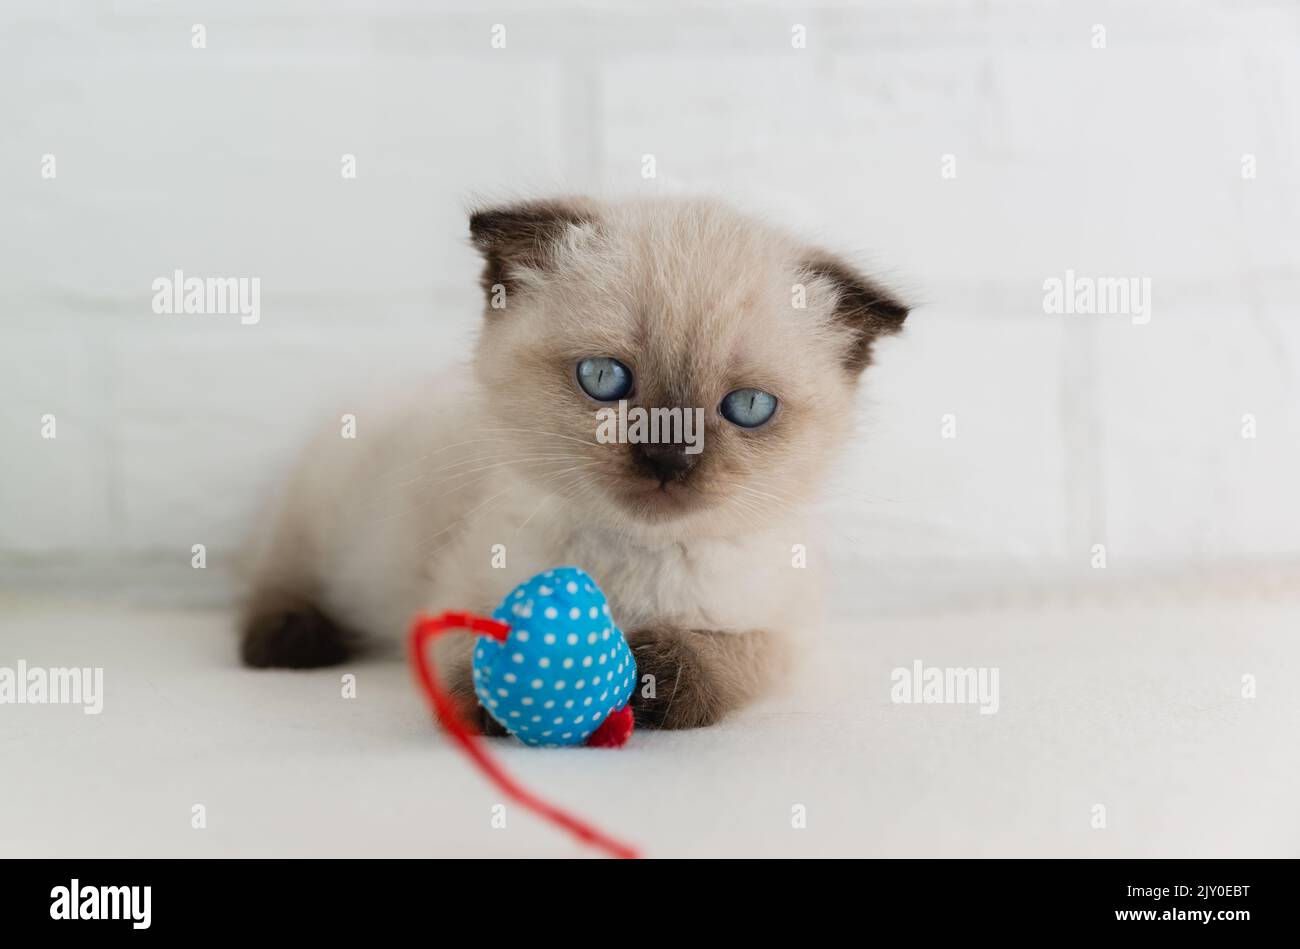 Un pequeño punto de gatito de ojos azules se encuentra con un ratón de juguete azul trapo. Enfoque selectivo Foto de stock